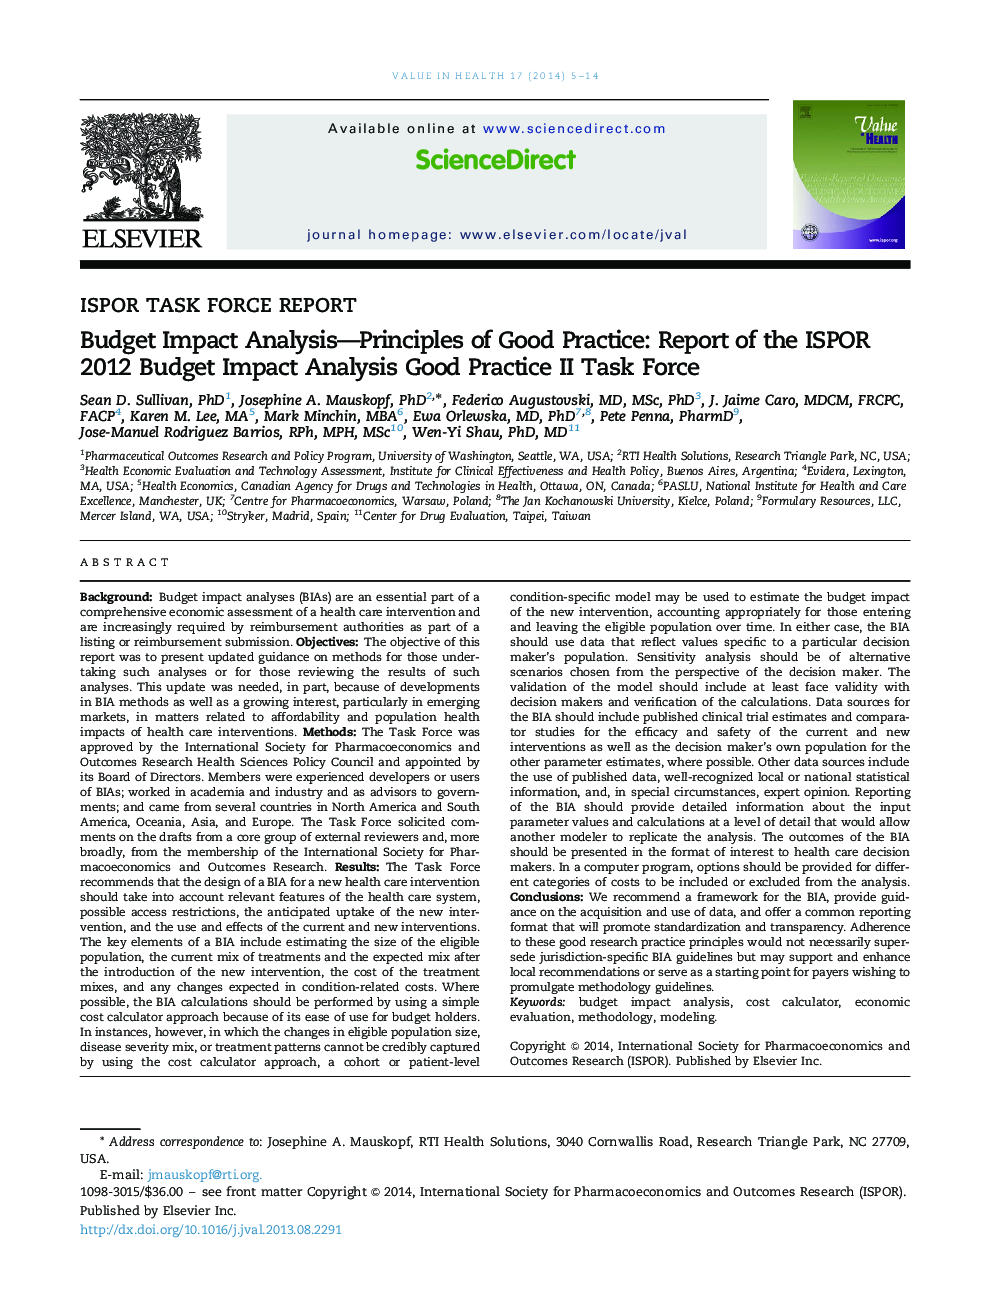 Budget Impact Analysis-Principles of Good Practice: Report of the ISPOR 2012 Budget Impact Analysis Good Practice II Task Force